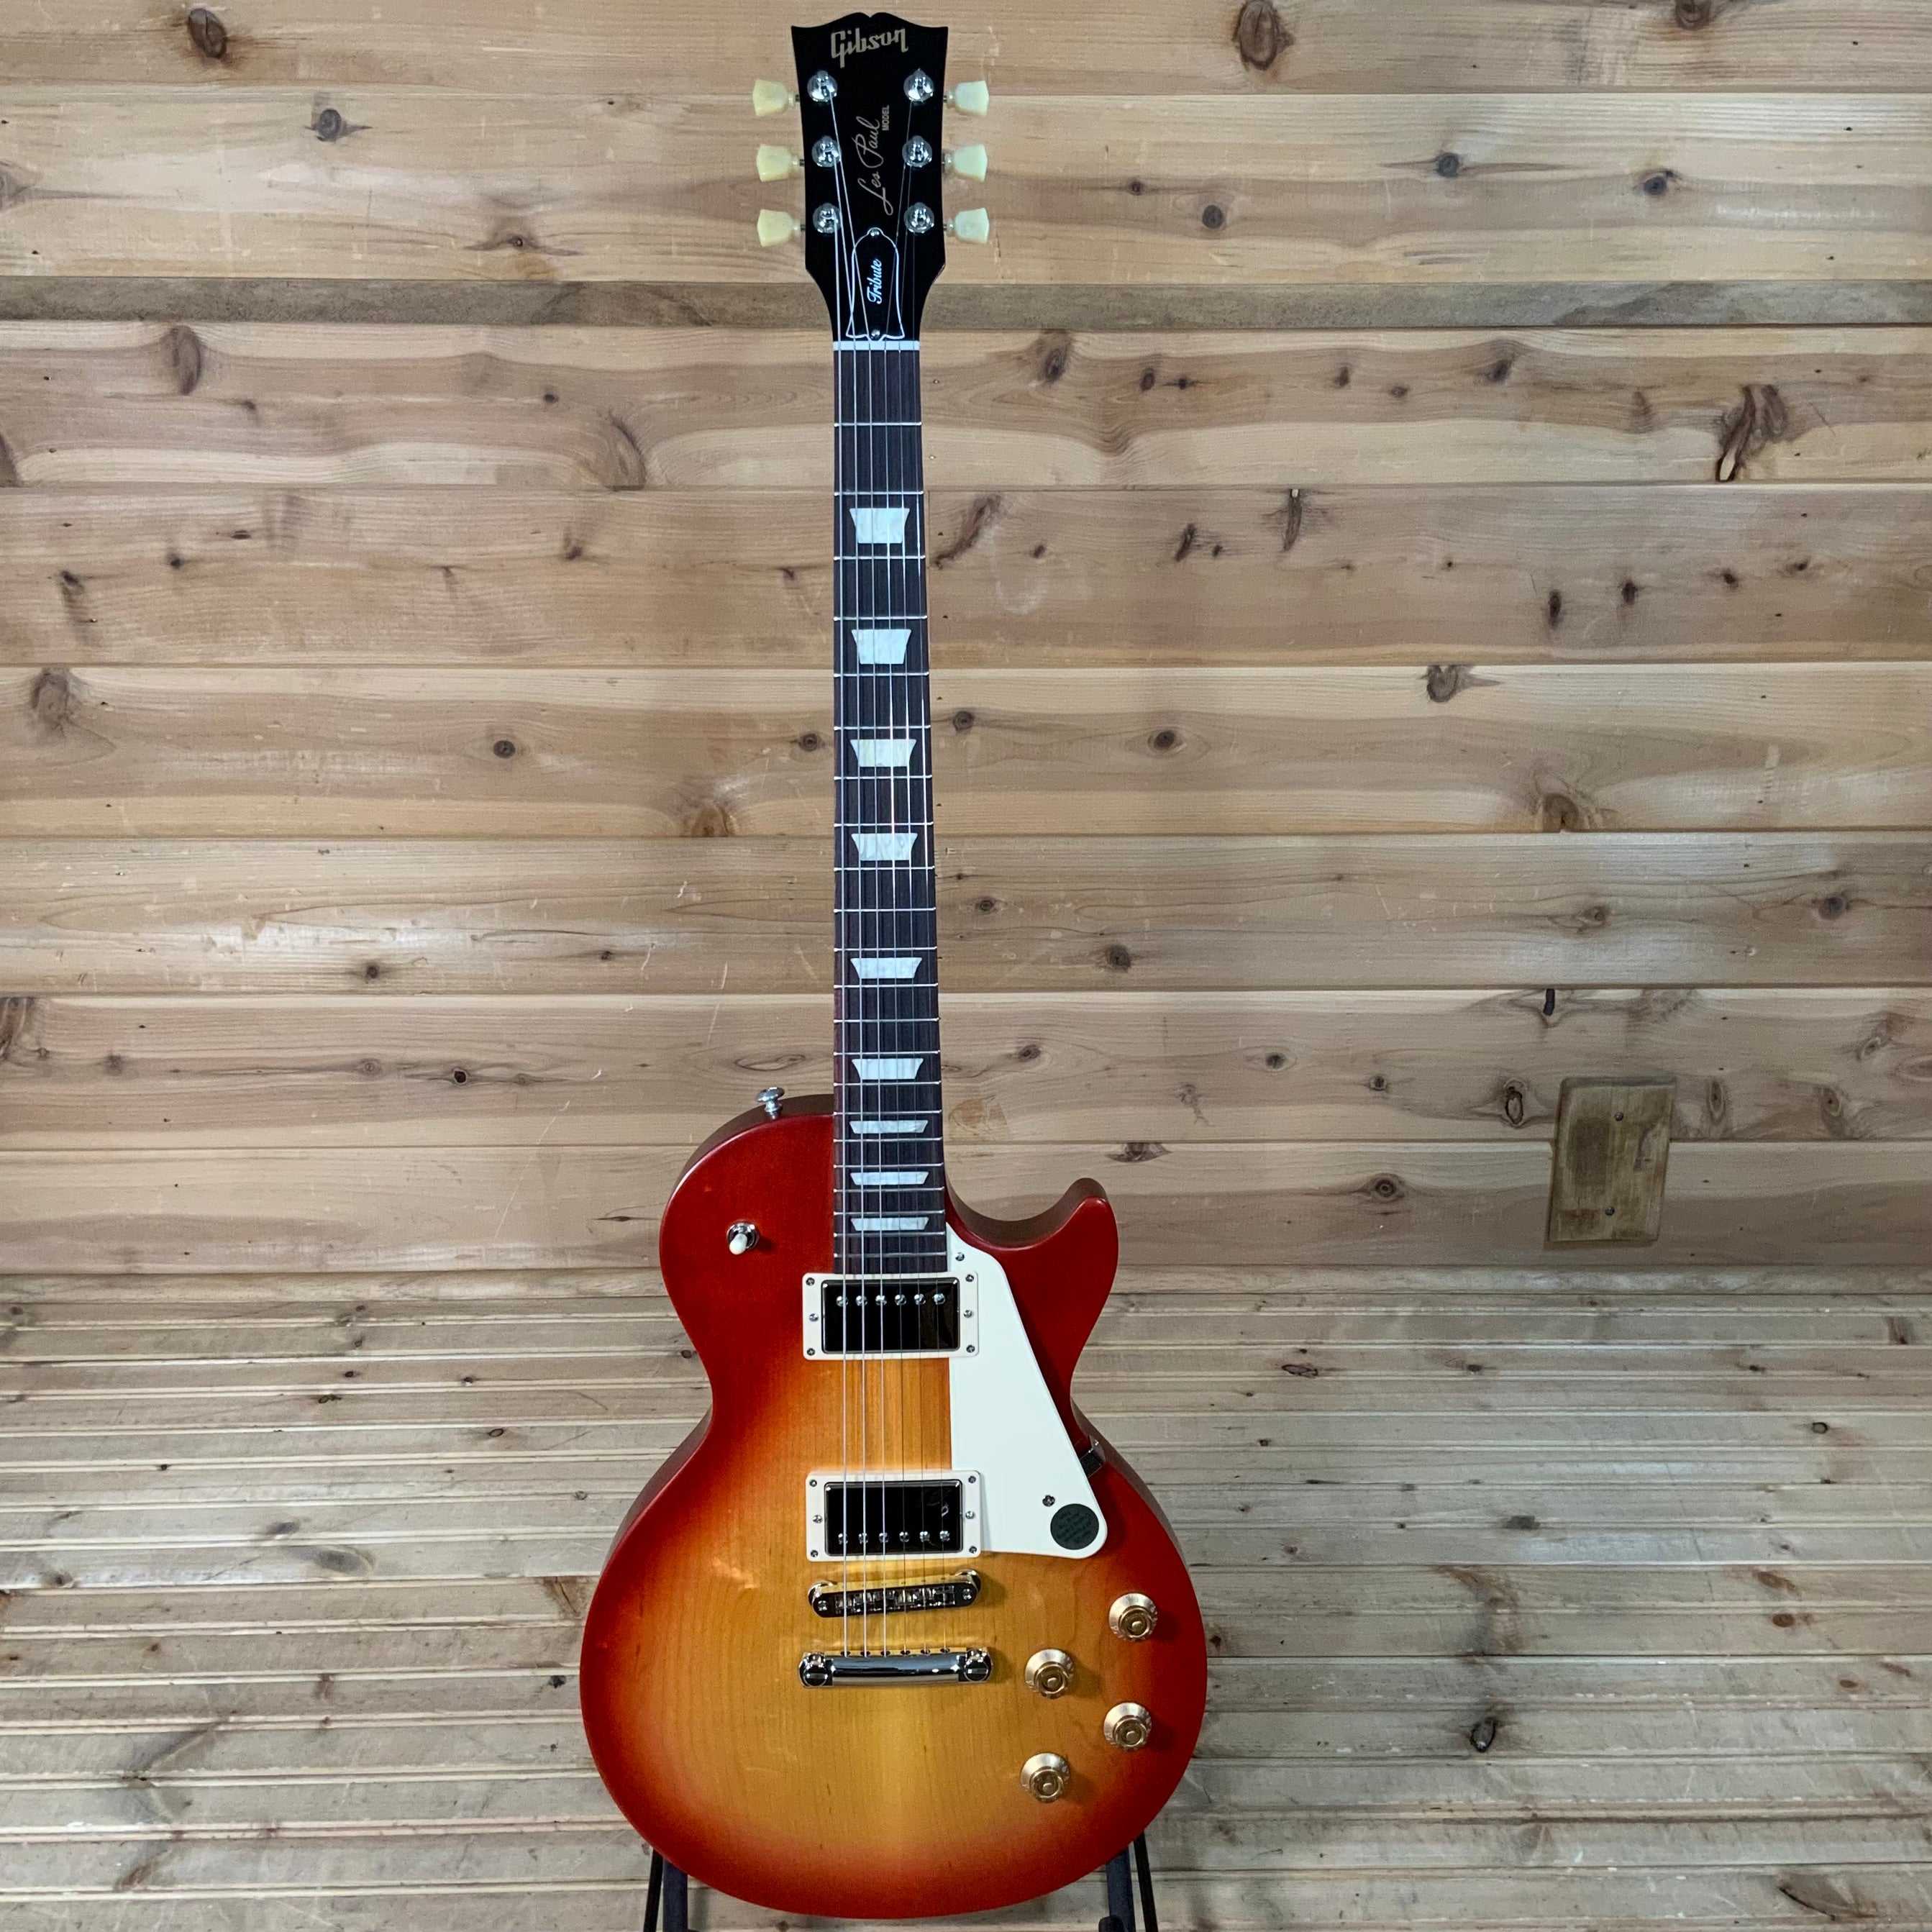 Gibson Les Paul Tribute Electric Guitar - Satin Cherry Sunburst